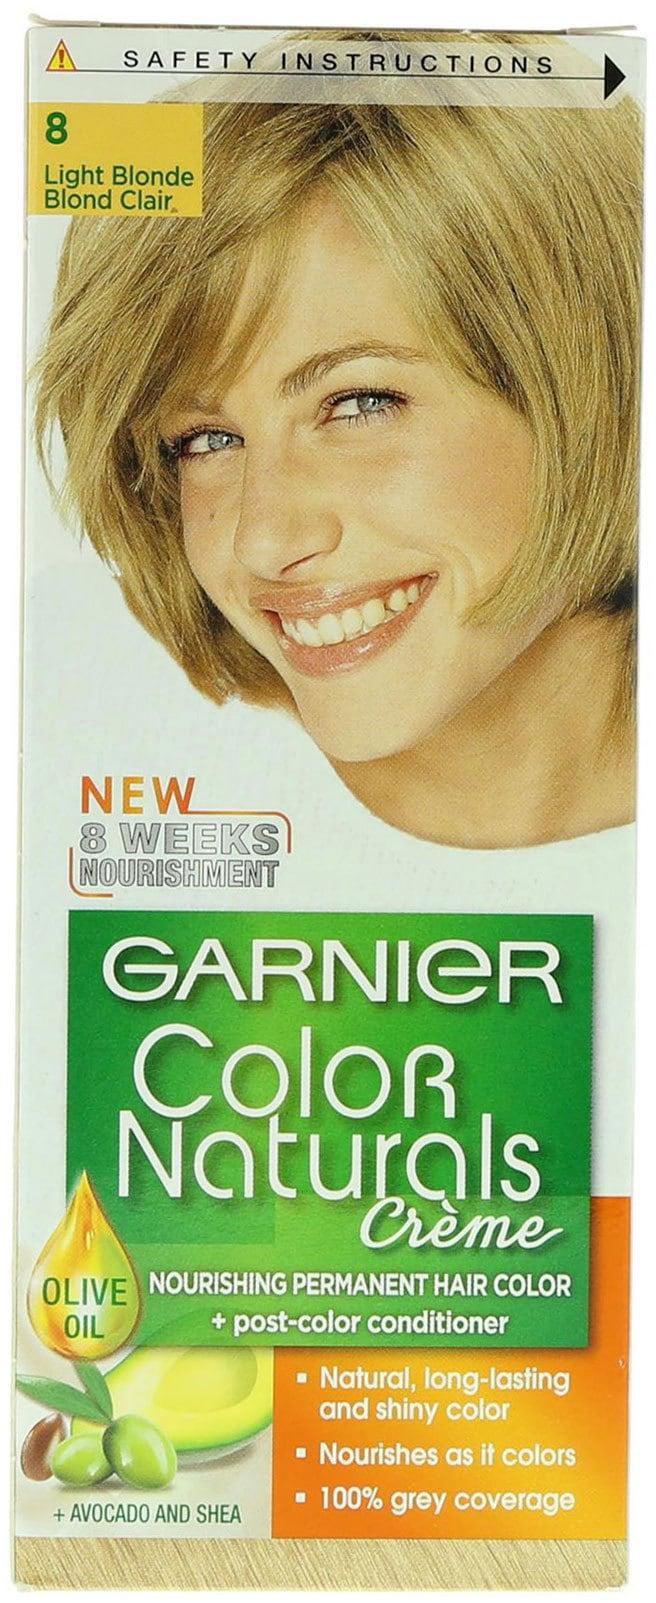 Garnier color naturals creme hair color 8 Light blonde